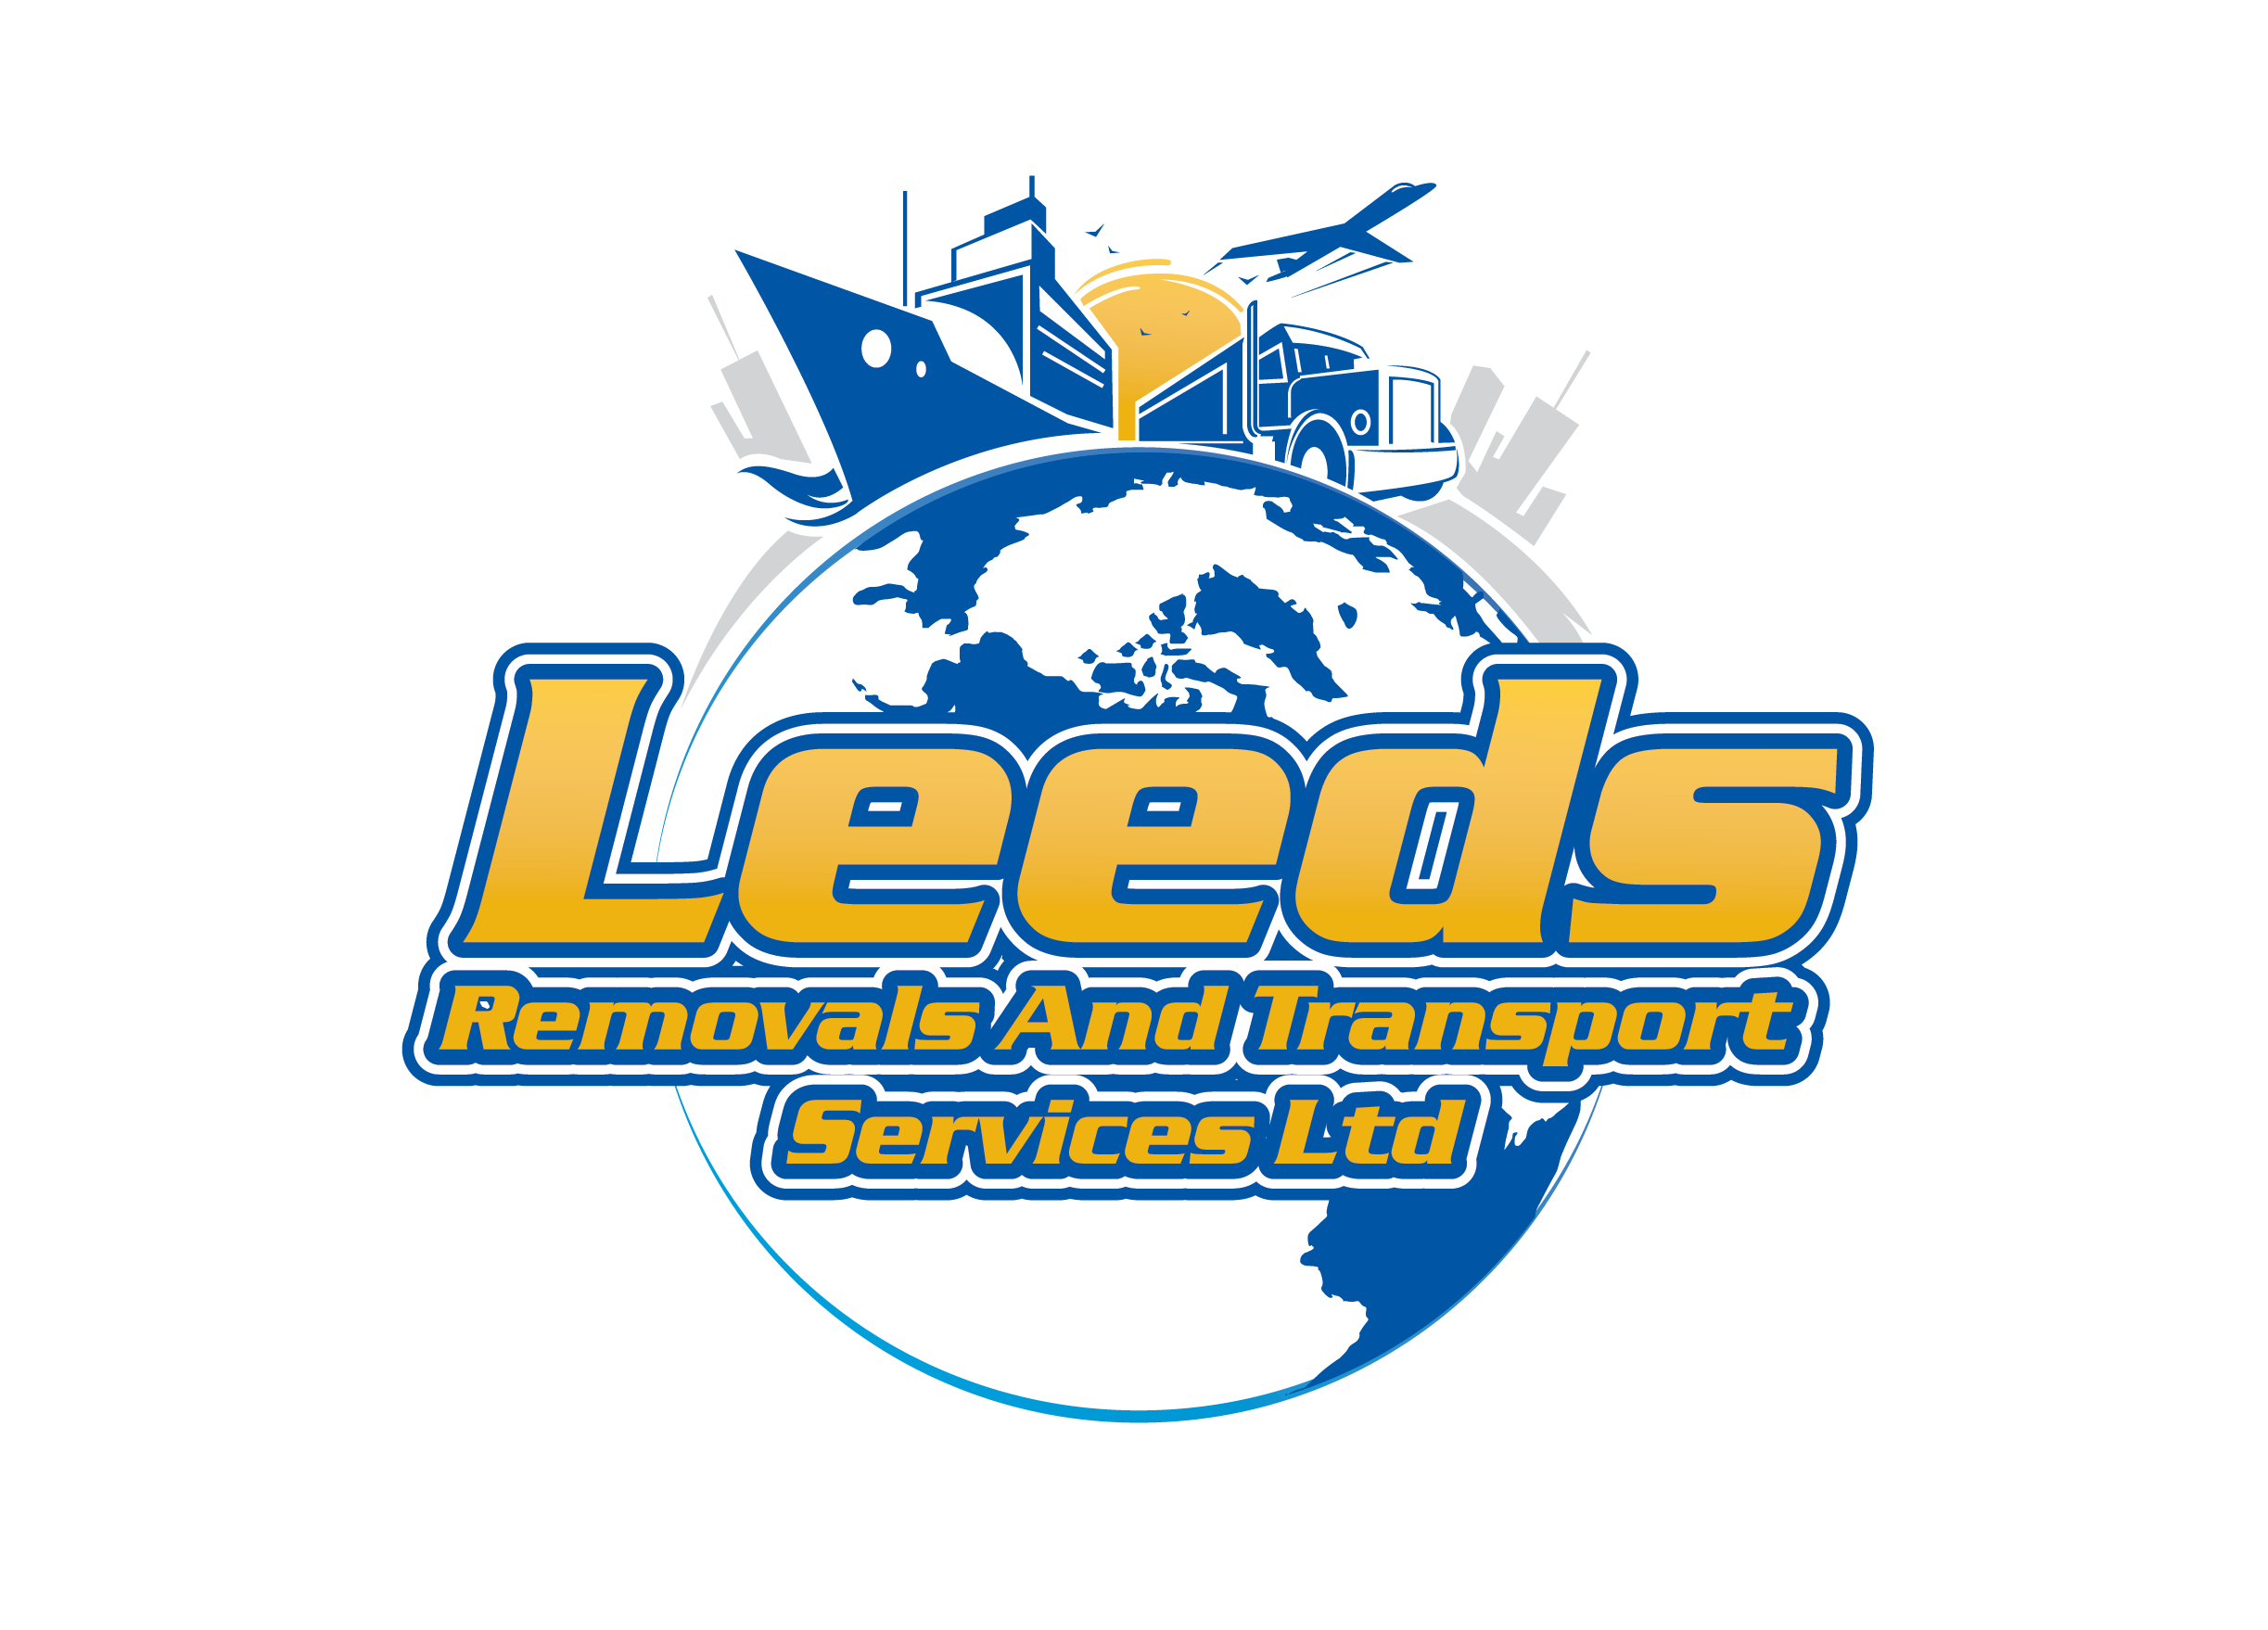 Leeds Removals And Transport Services Ltd